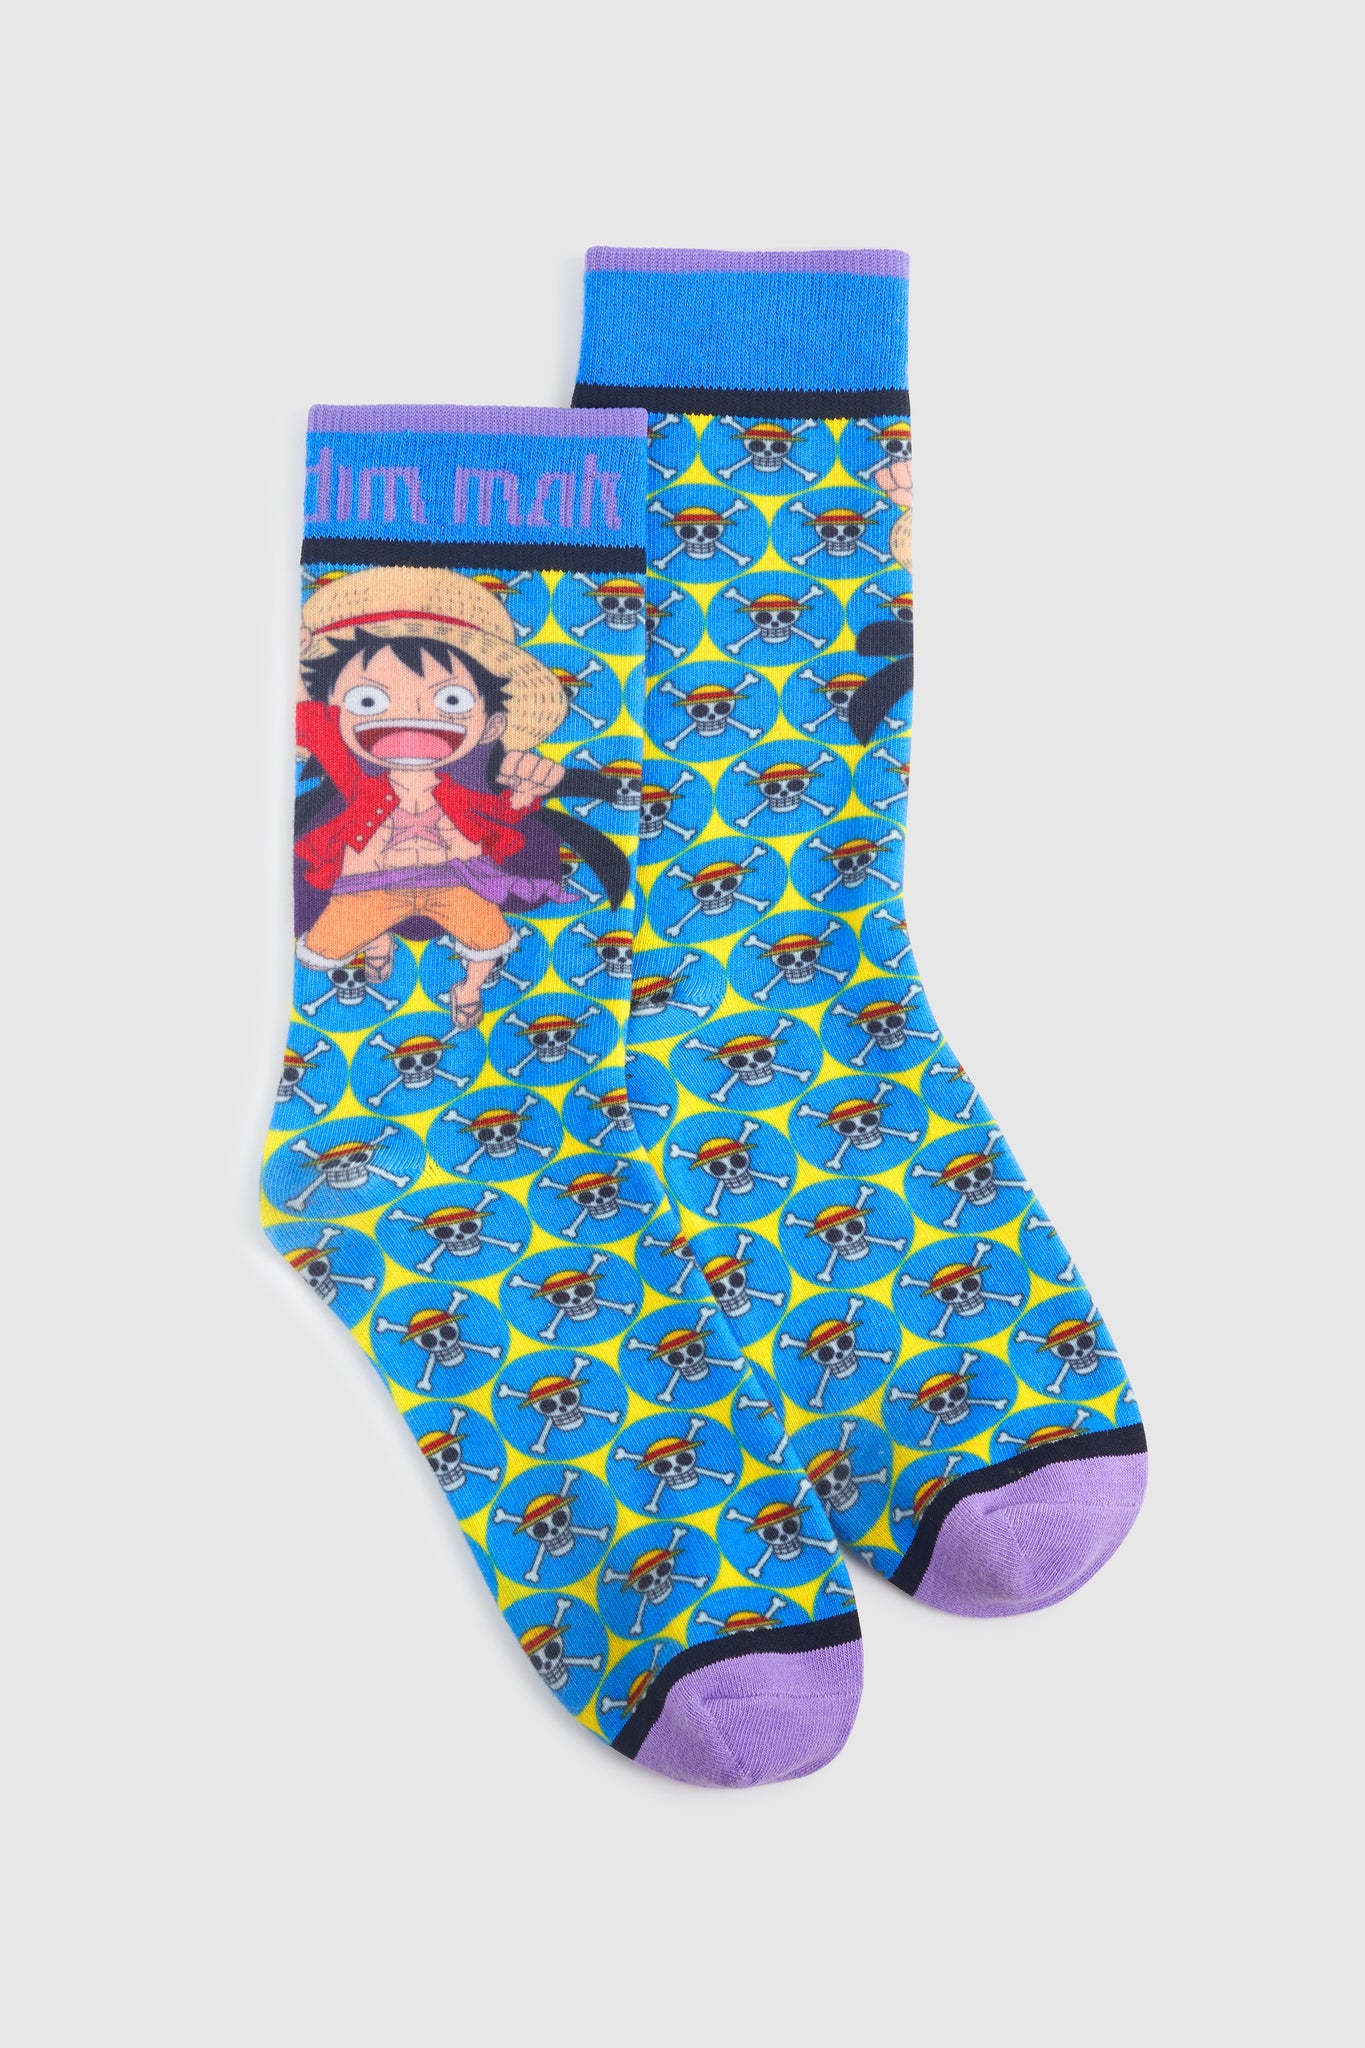 Dim Mak x One Piece - Luffy Socks - Blue